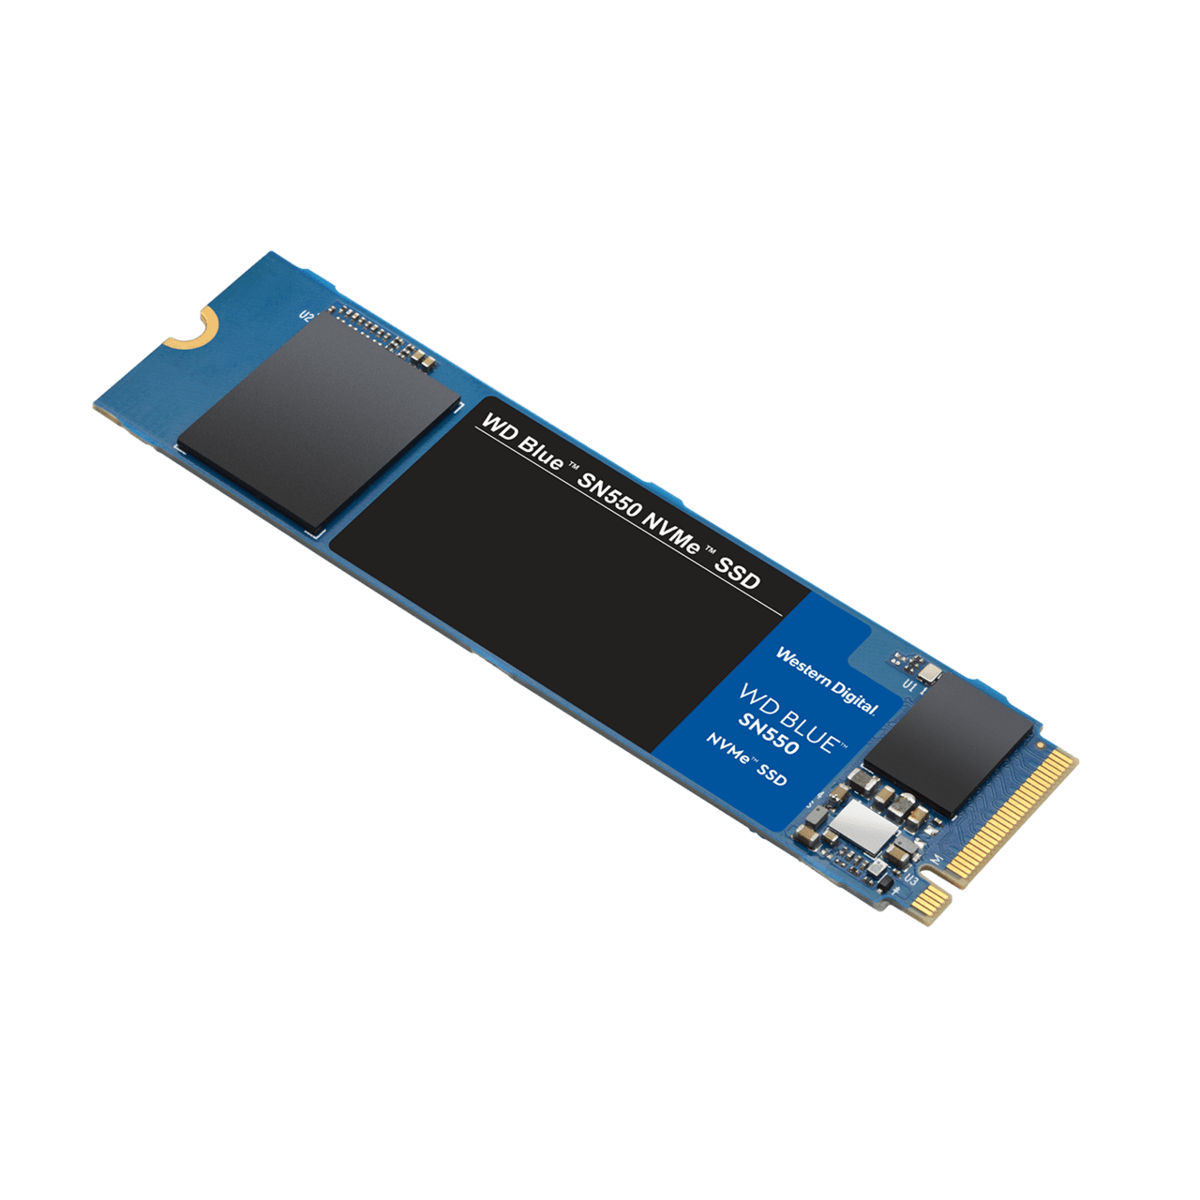 Western Digital Blue SN550 NVMe 1 TB SSD Benchmarked 